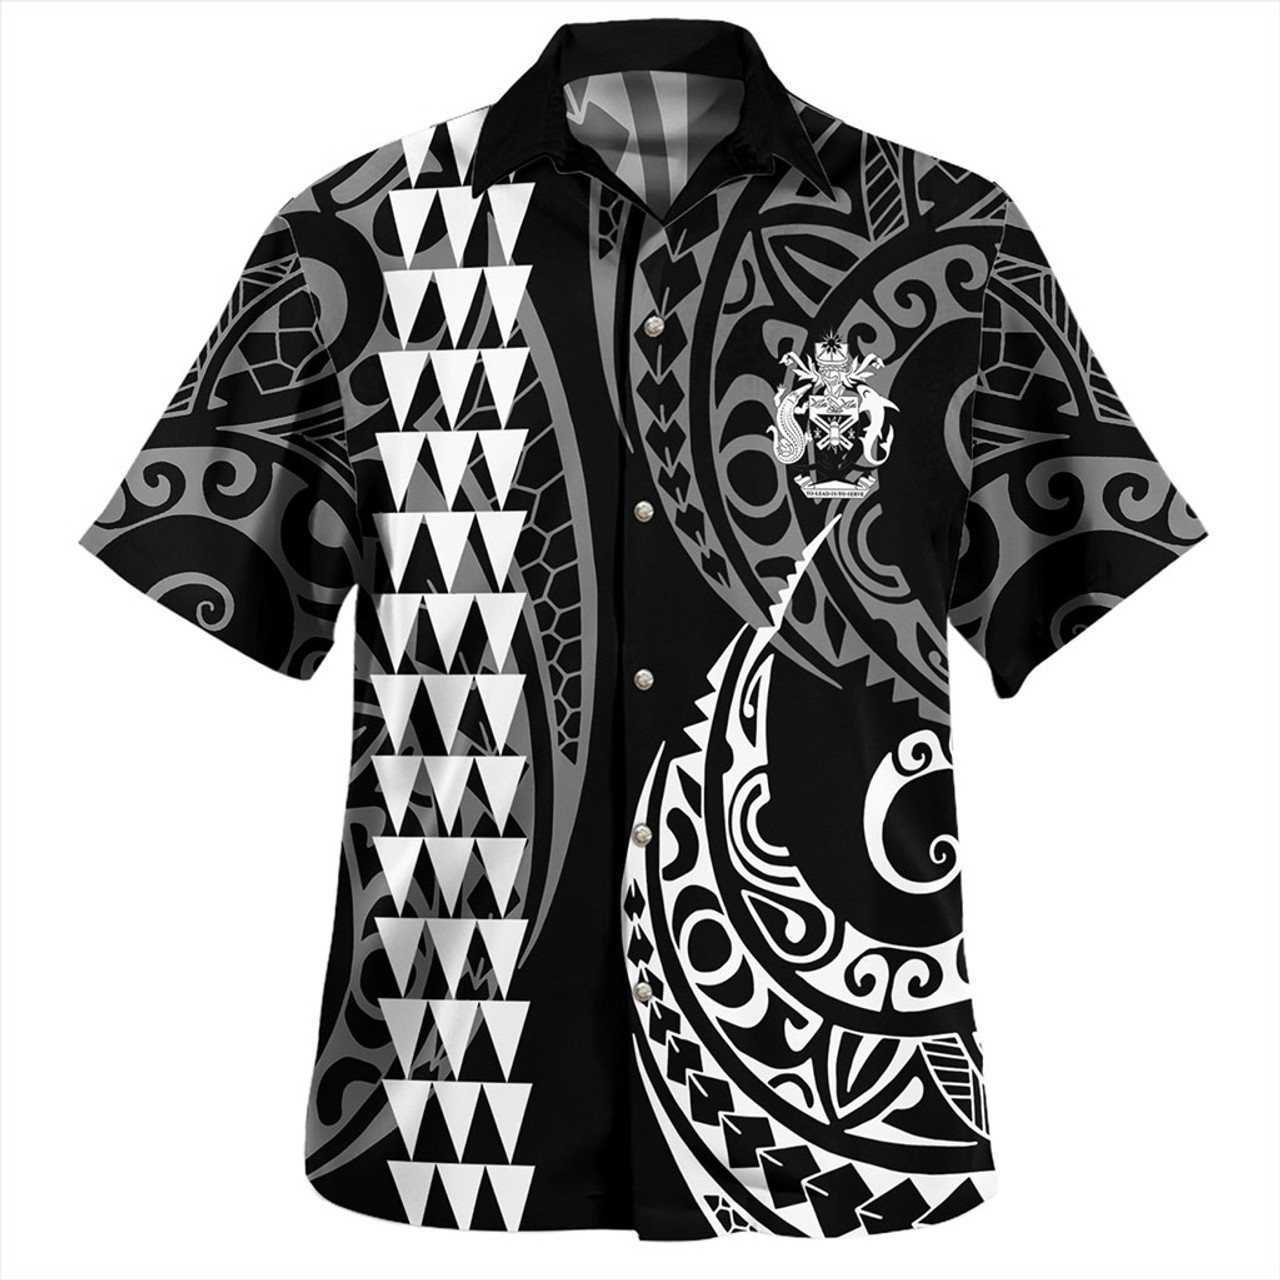 Solomon Islands Combo Puletasi And Shirt Kakau Style White